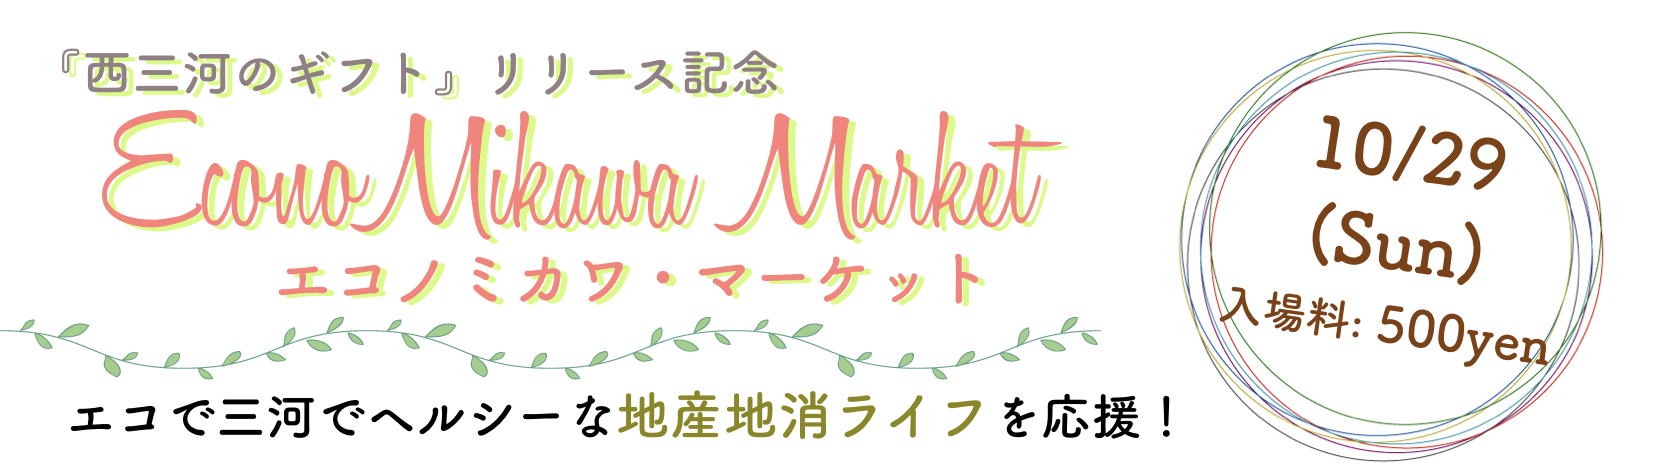 Economikawa Market開催決定 Re Grid Inc